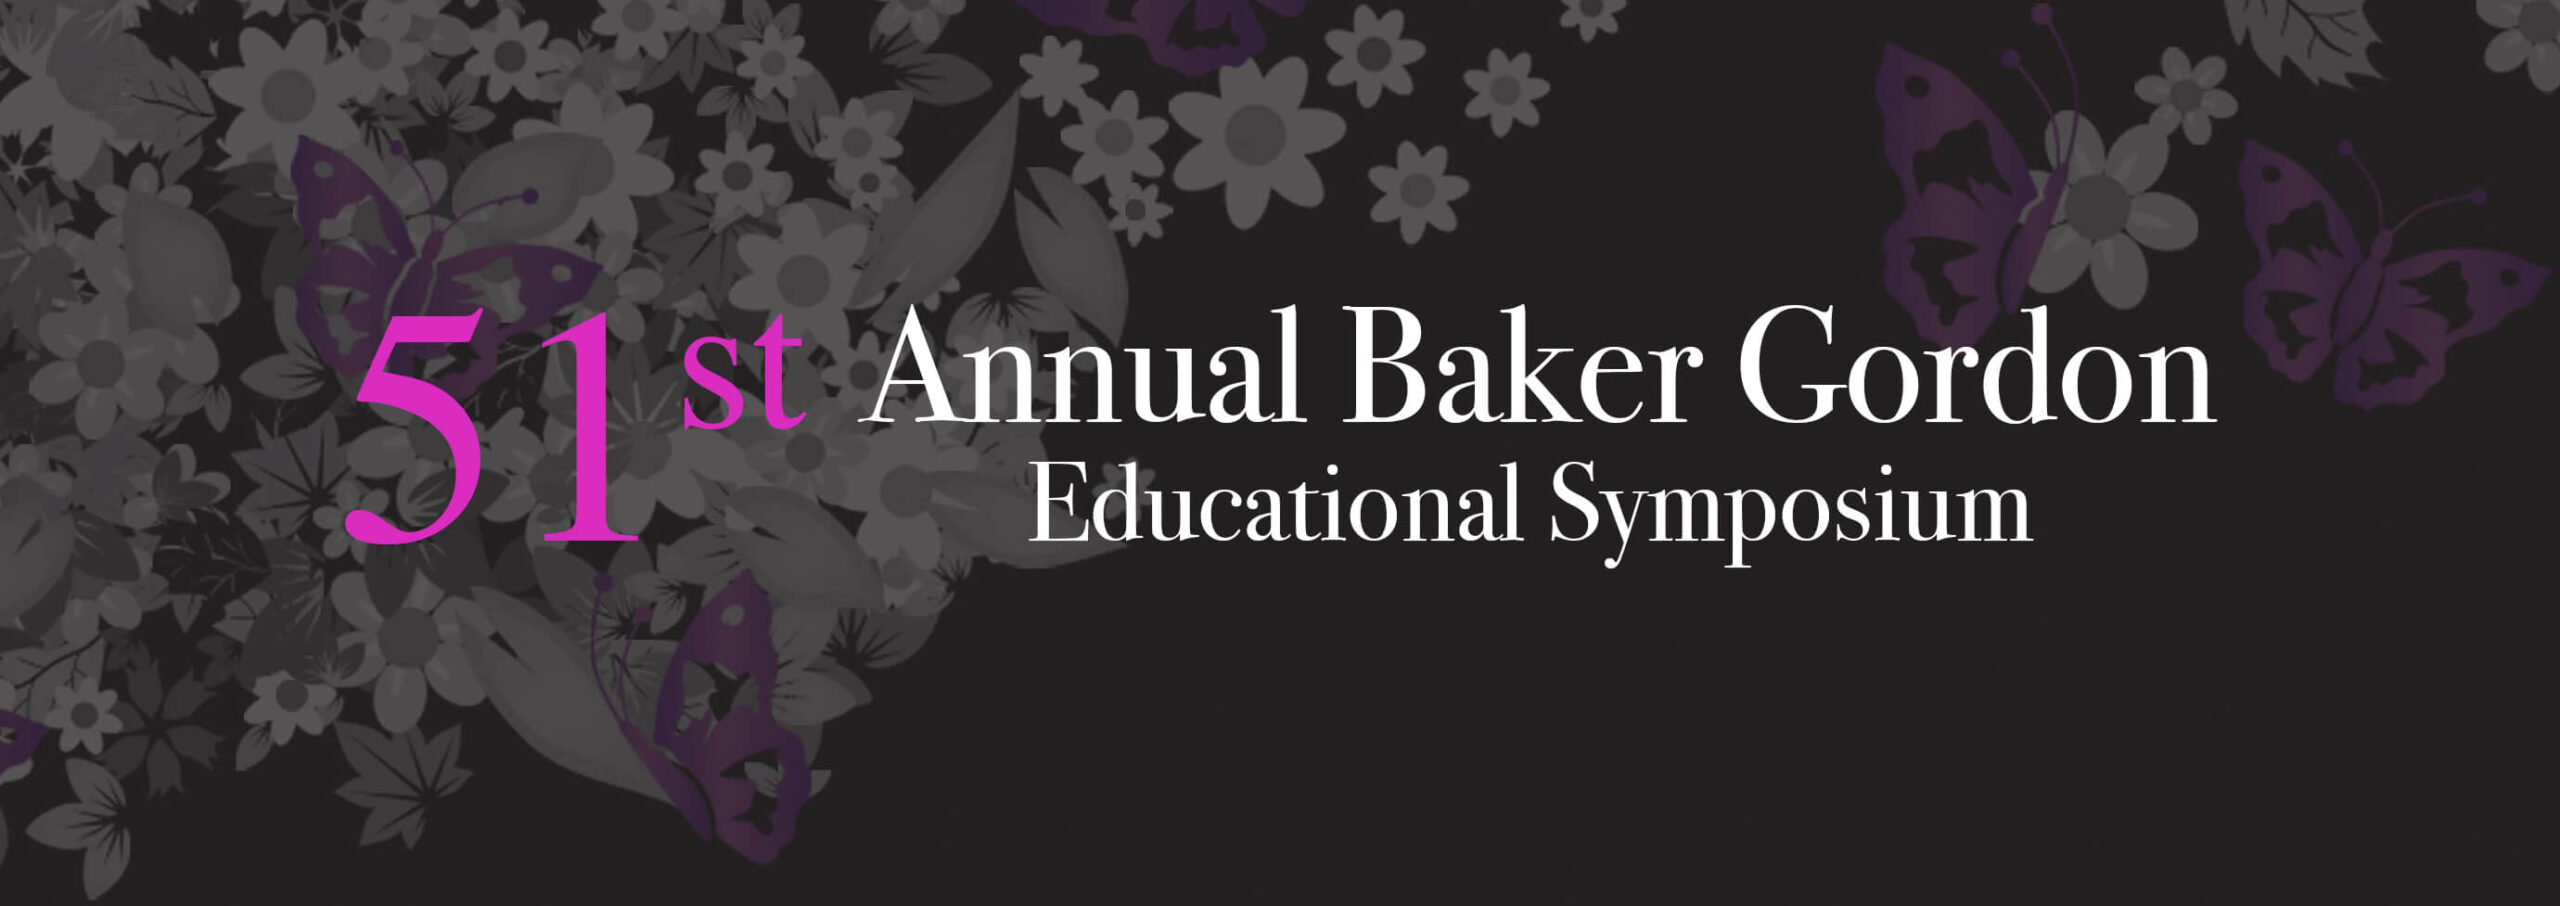 51st Annual Baker Gordon Educational Symposium event banner